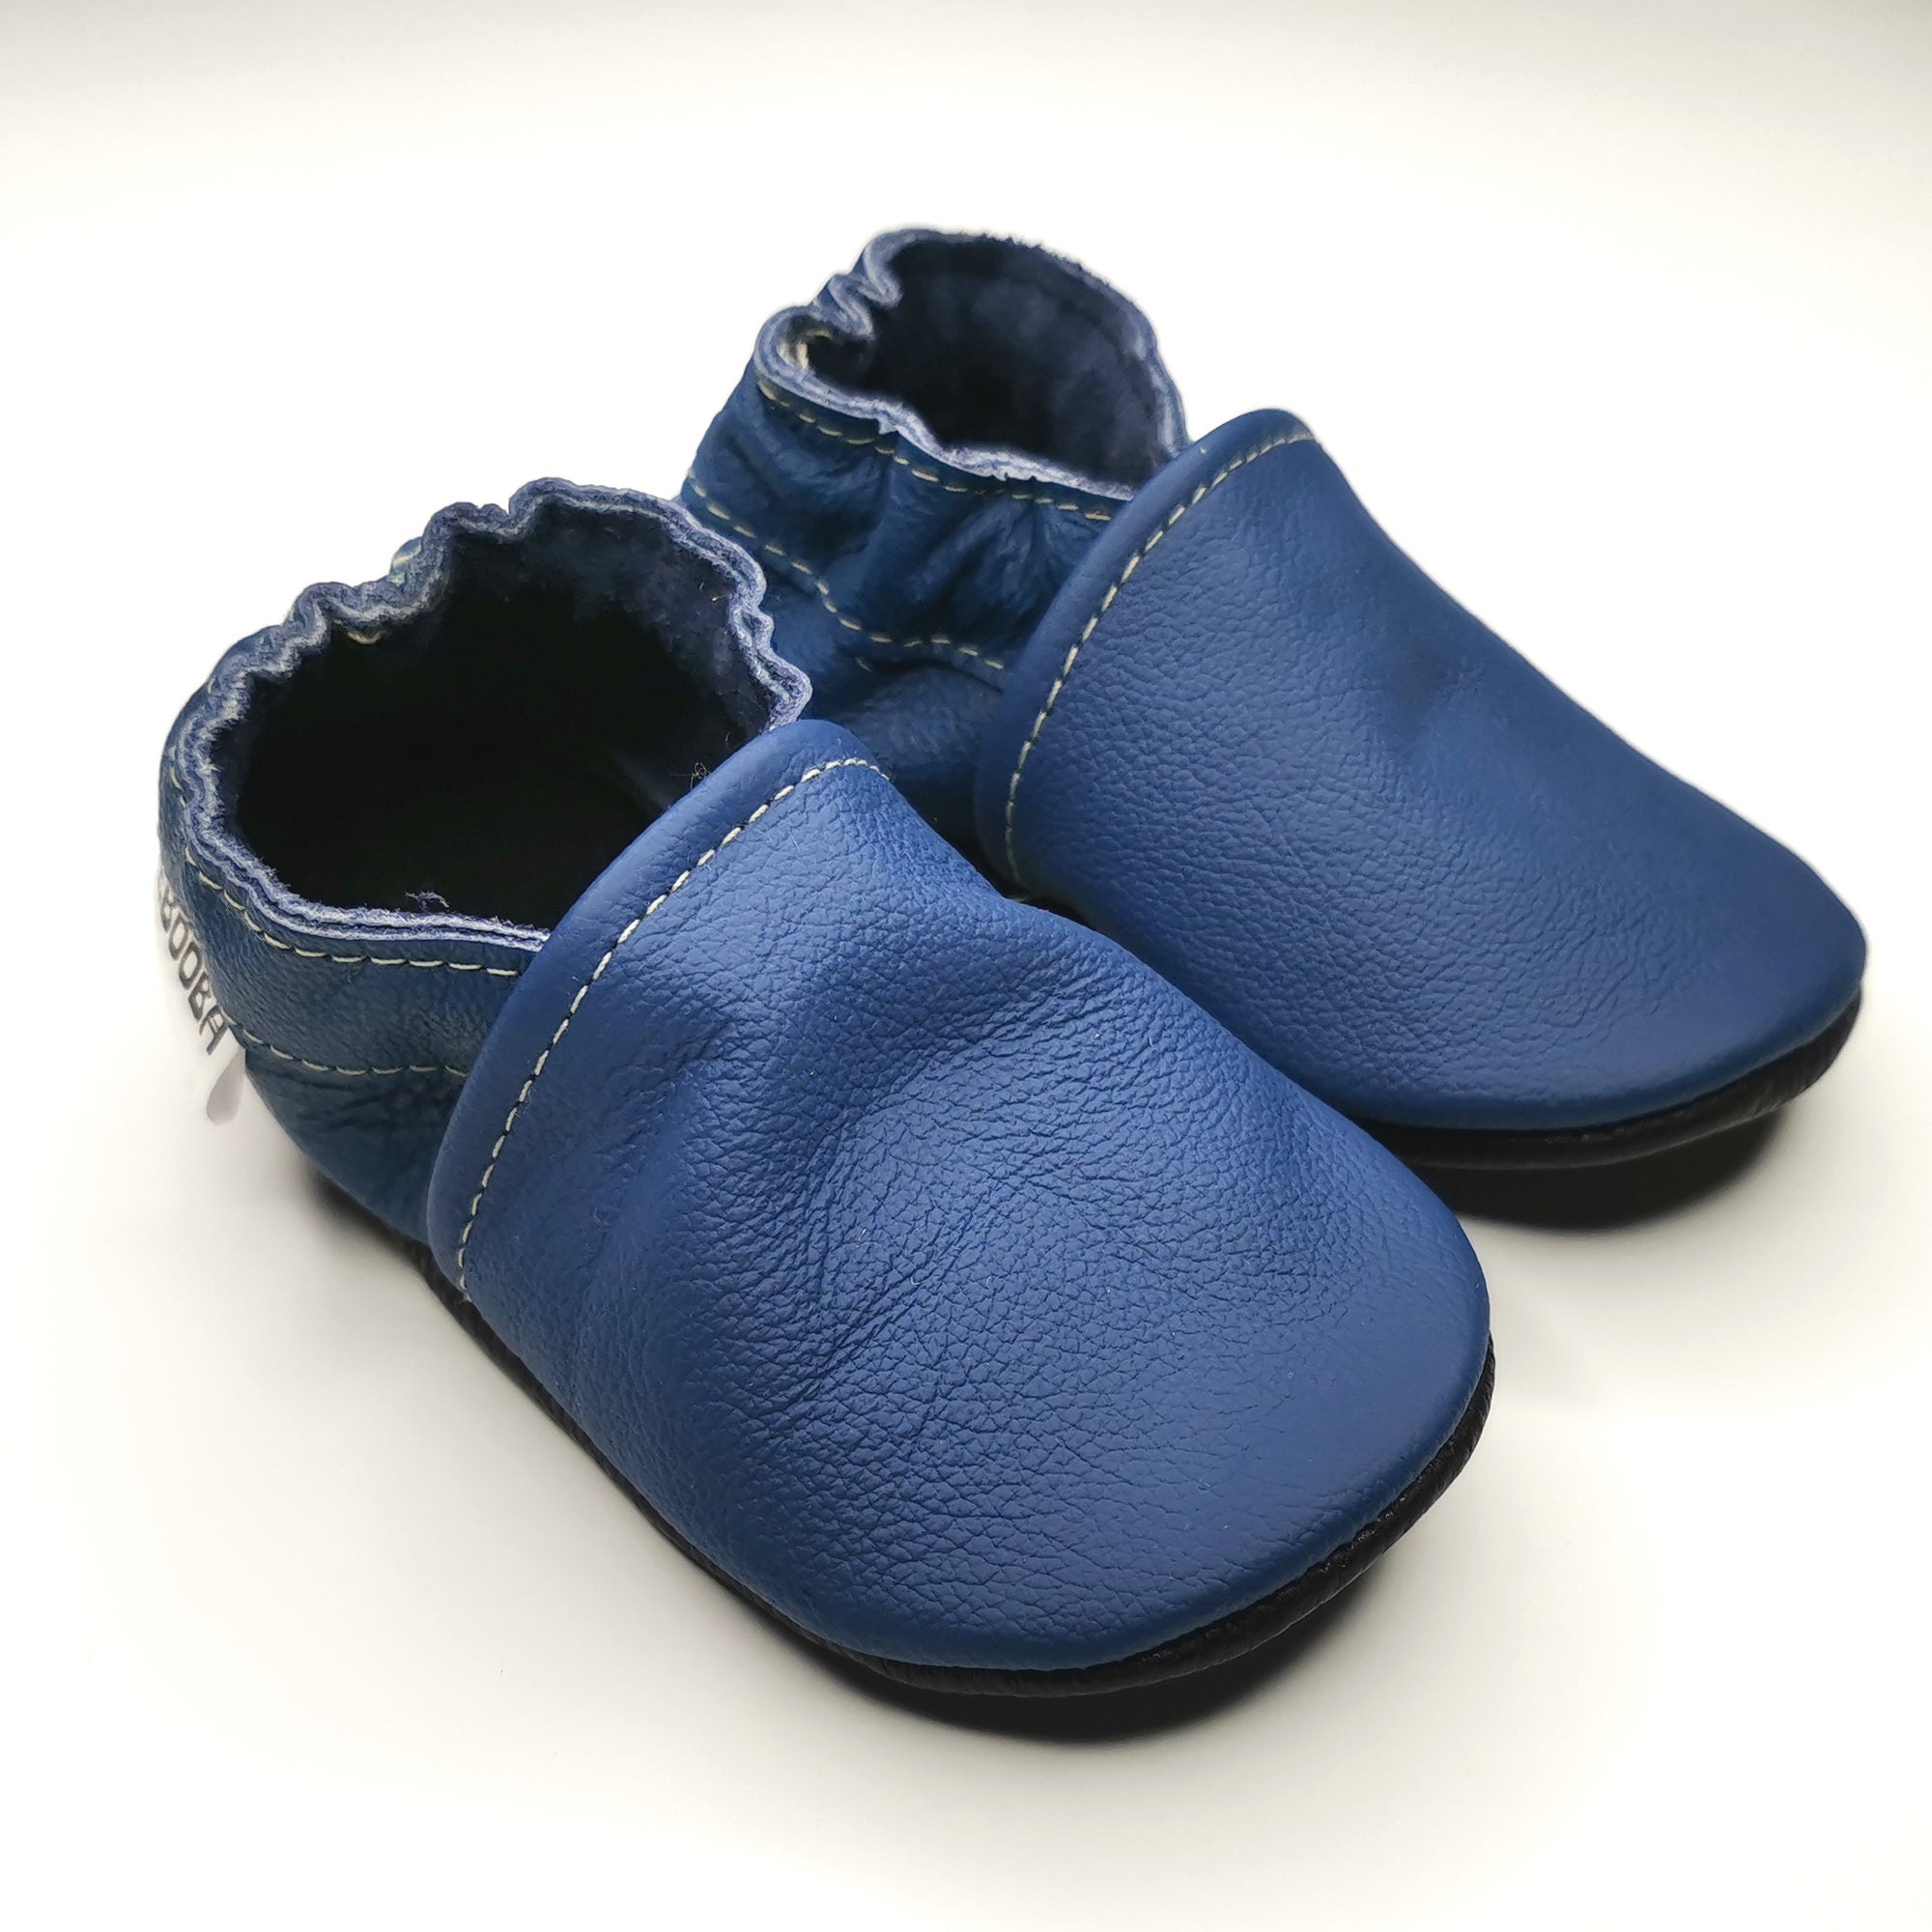 Baby shoes Leather soft sole Baby Moccasins Ebooba Crib | Etsy